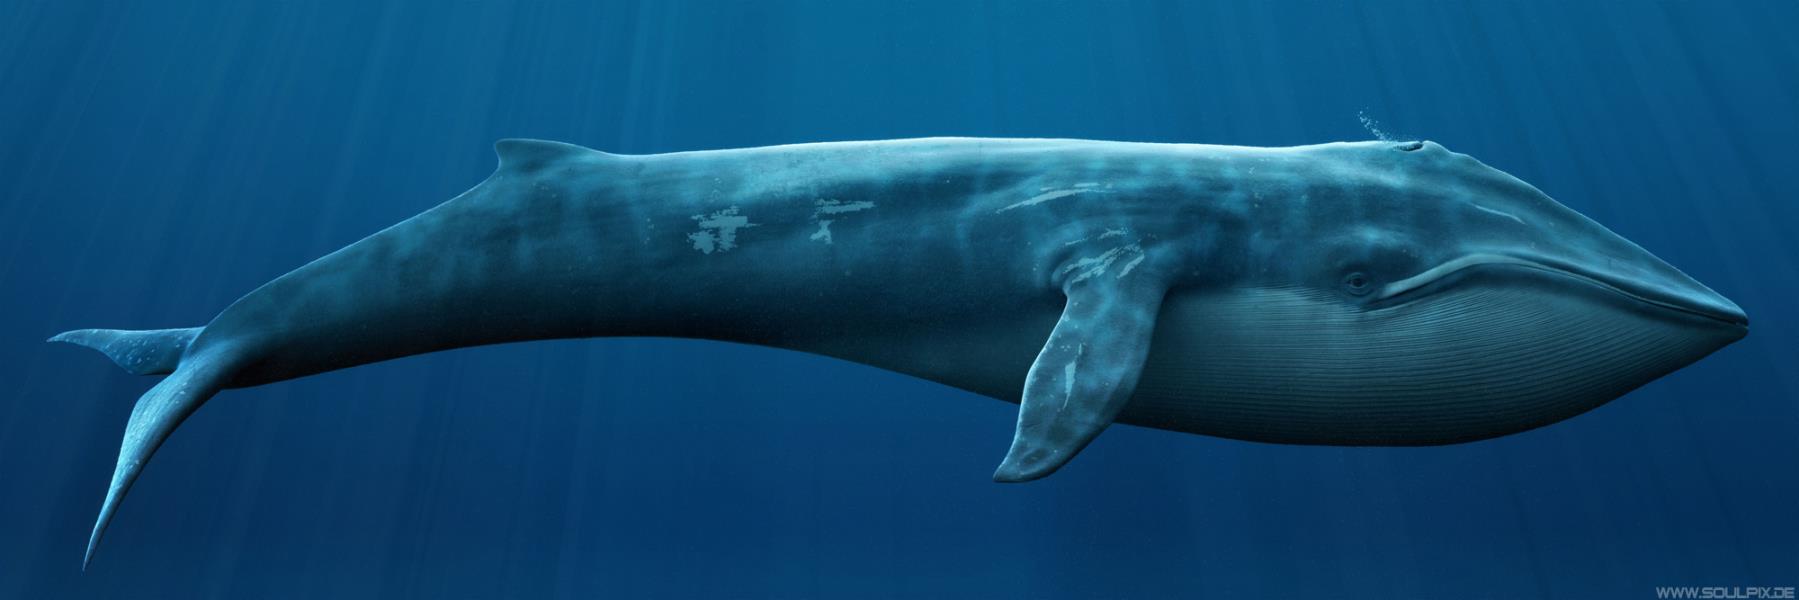 diving blue whale